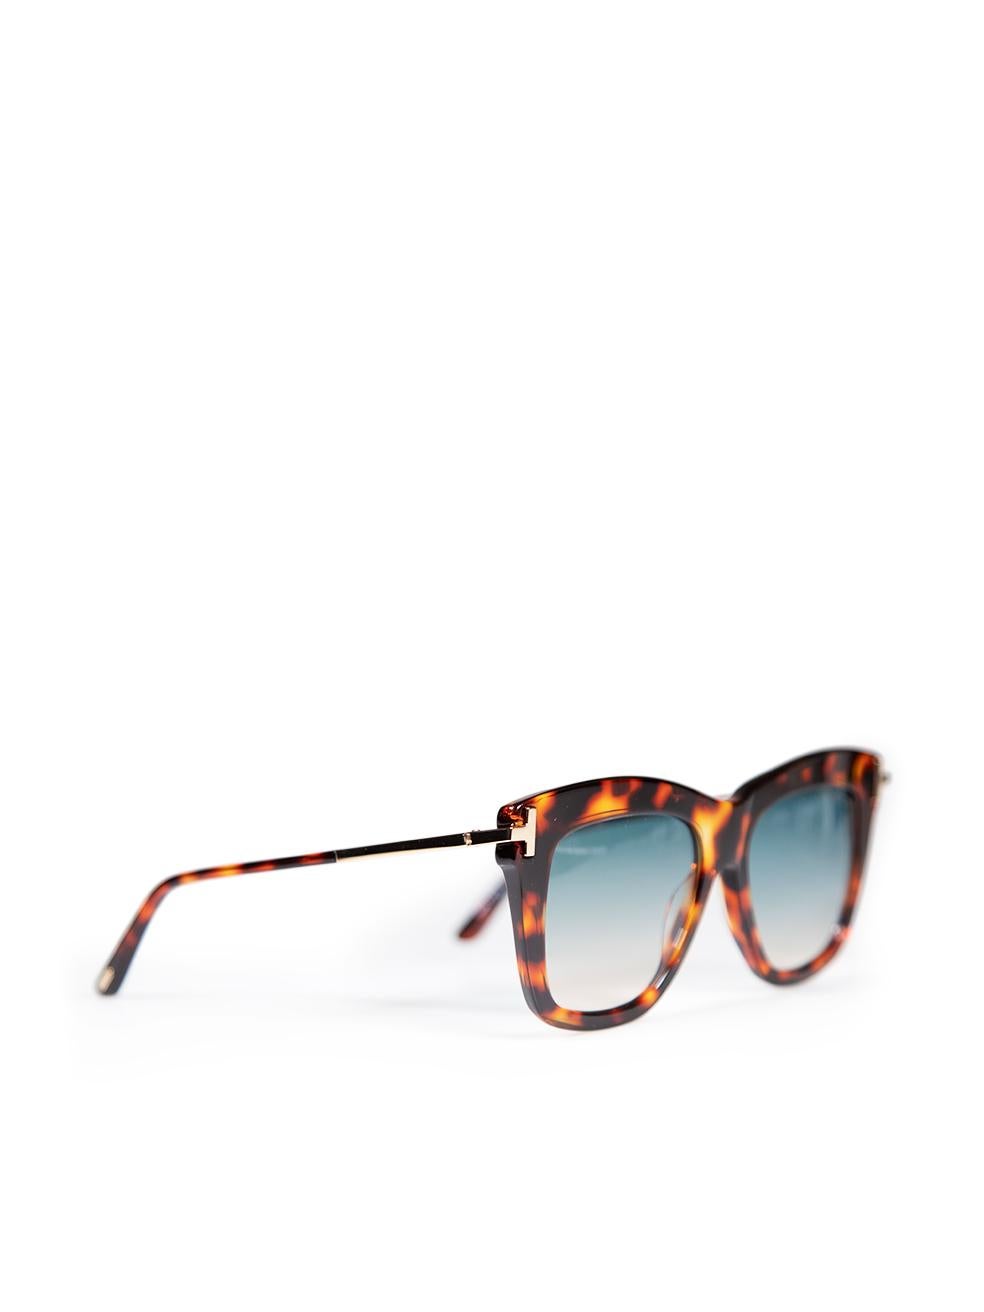 Tom Ford Coloured Havana Tortoiseshell Dasha Sunglasses In New Condition For Sale In London, GB